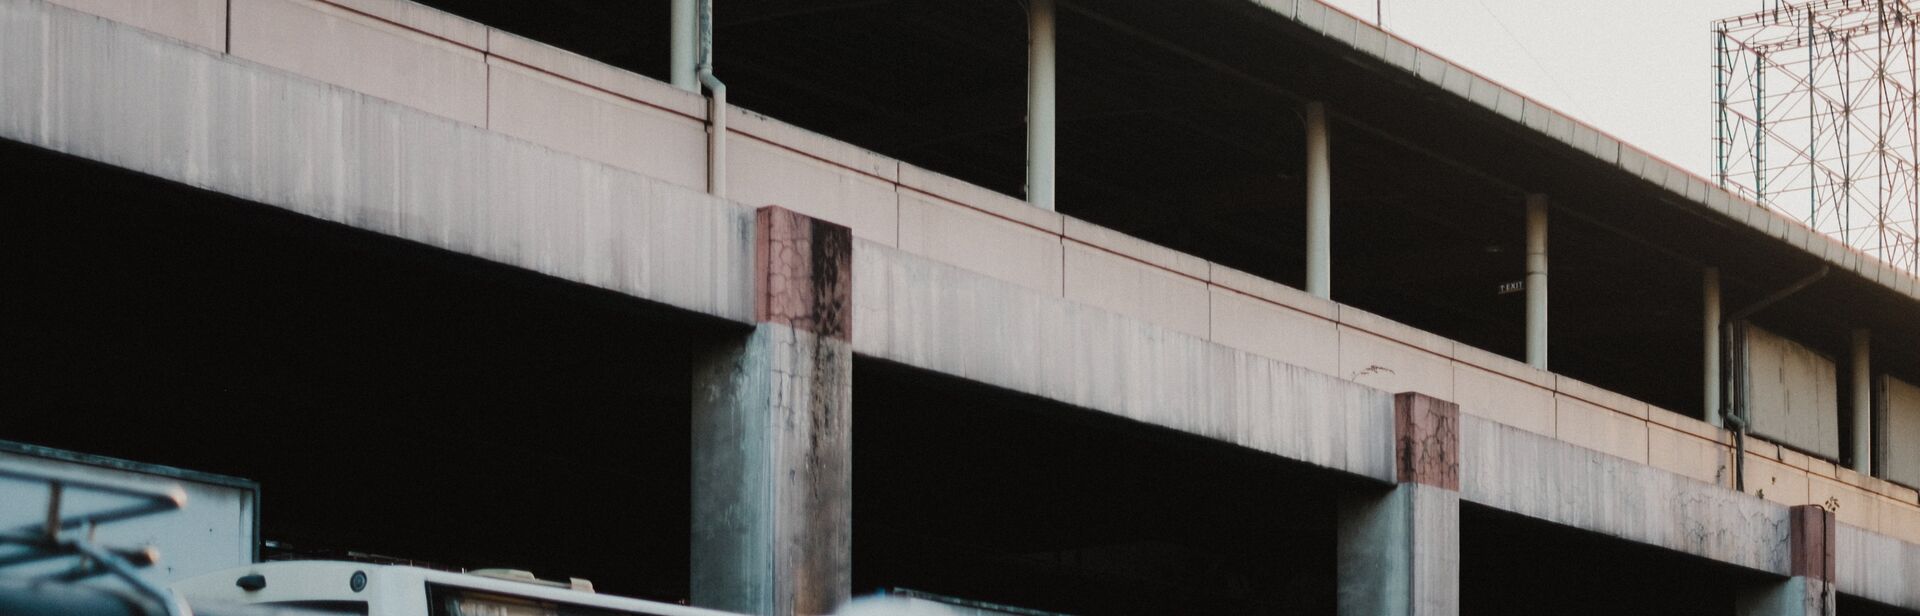 a man walks past a concrete overpass